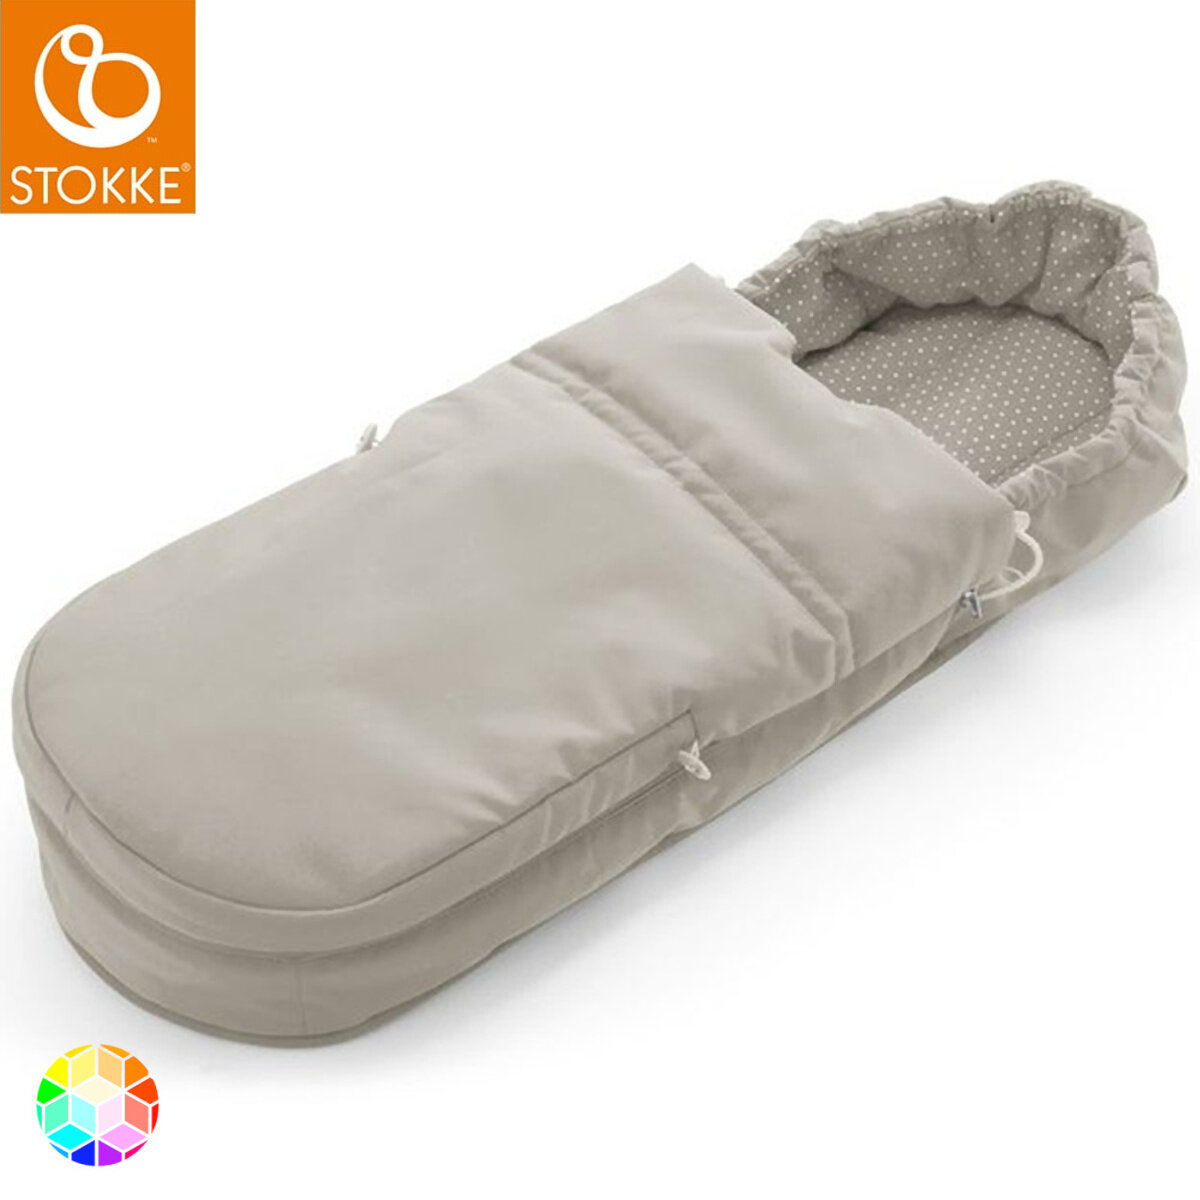 Stokke Scoot Softbag Nest Schlafsack, 79,00 - Babyprofi